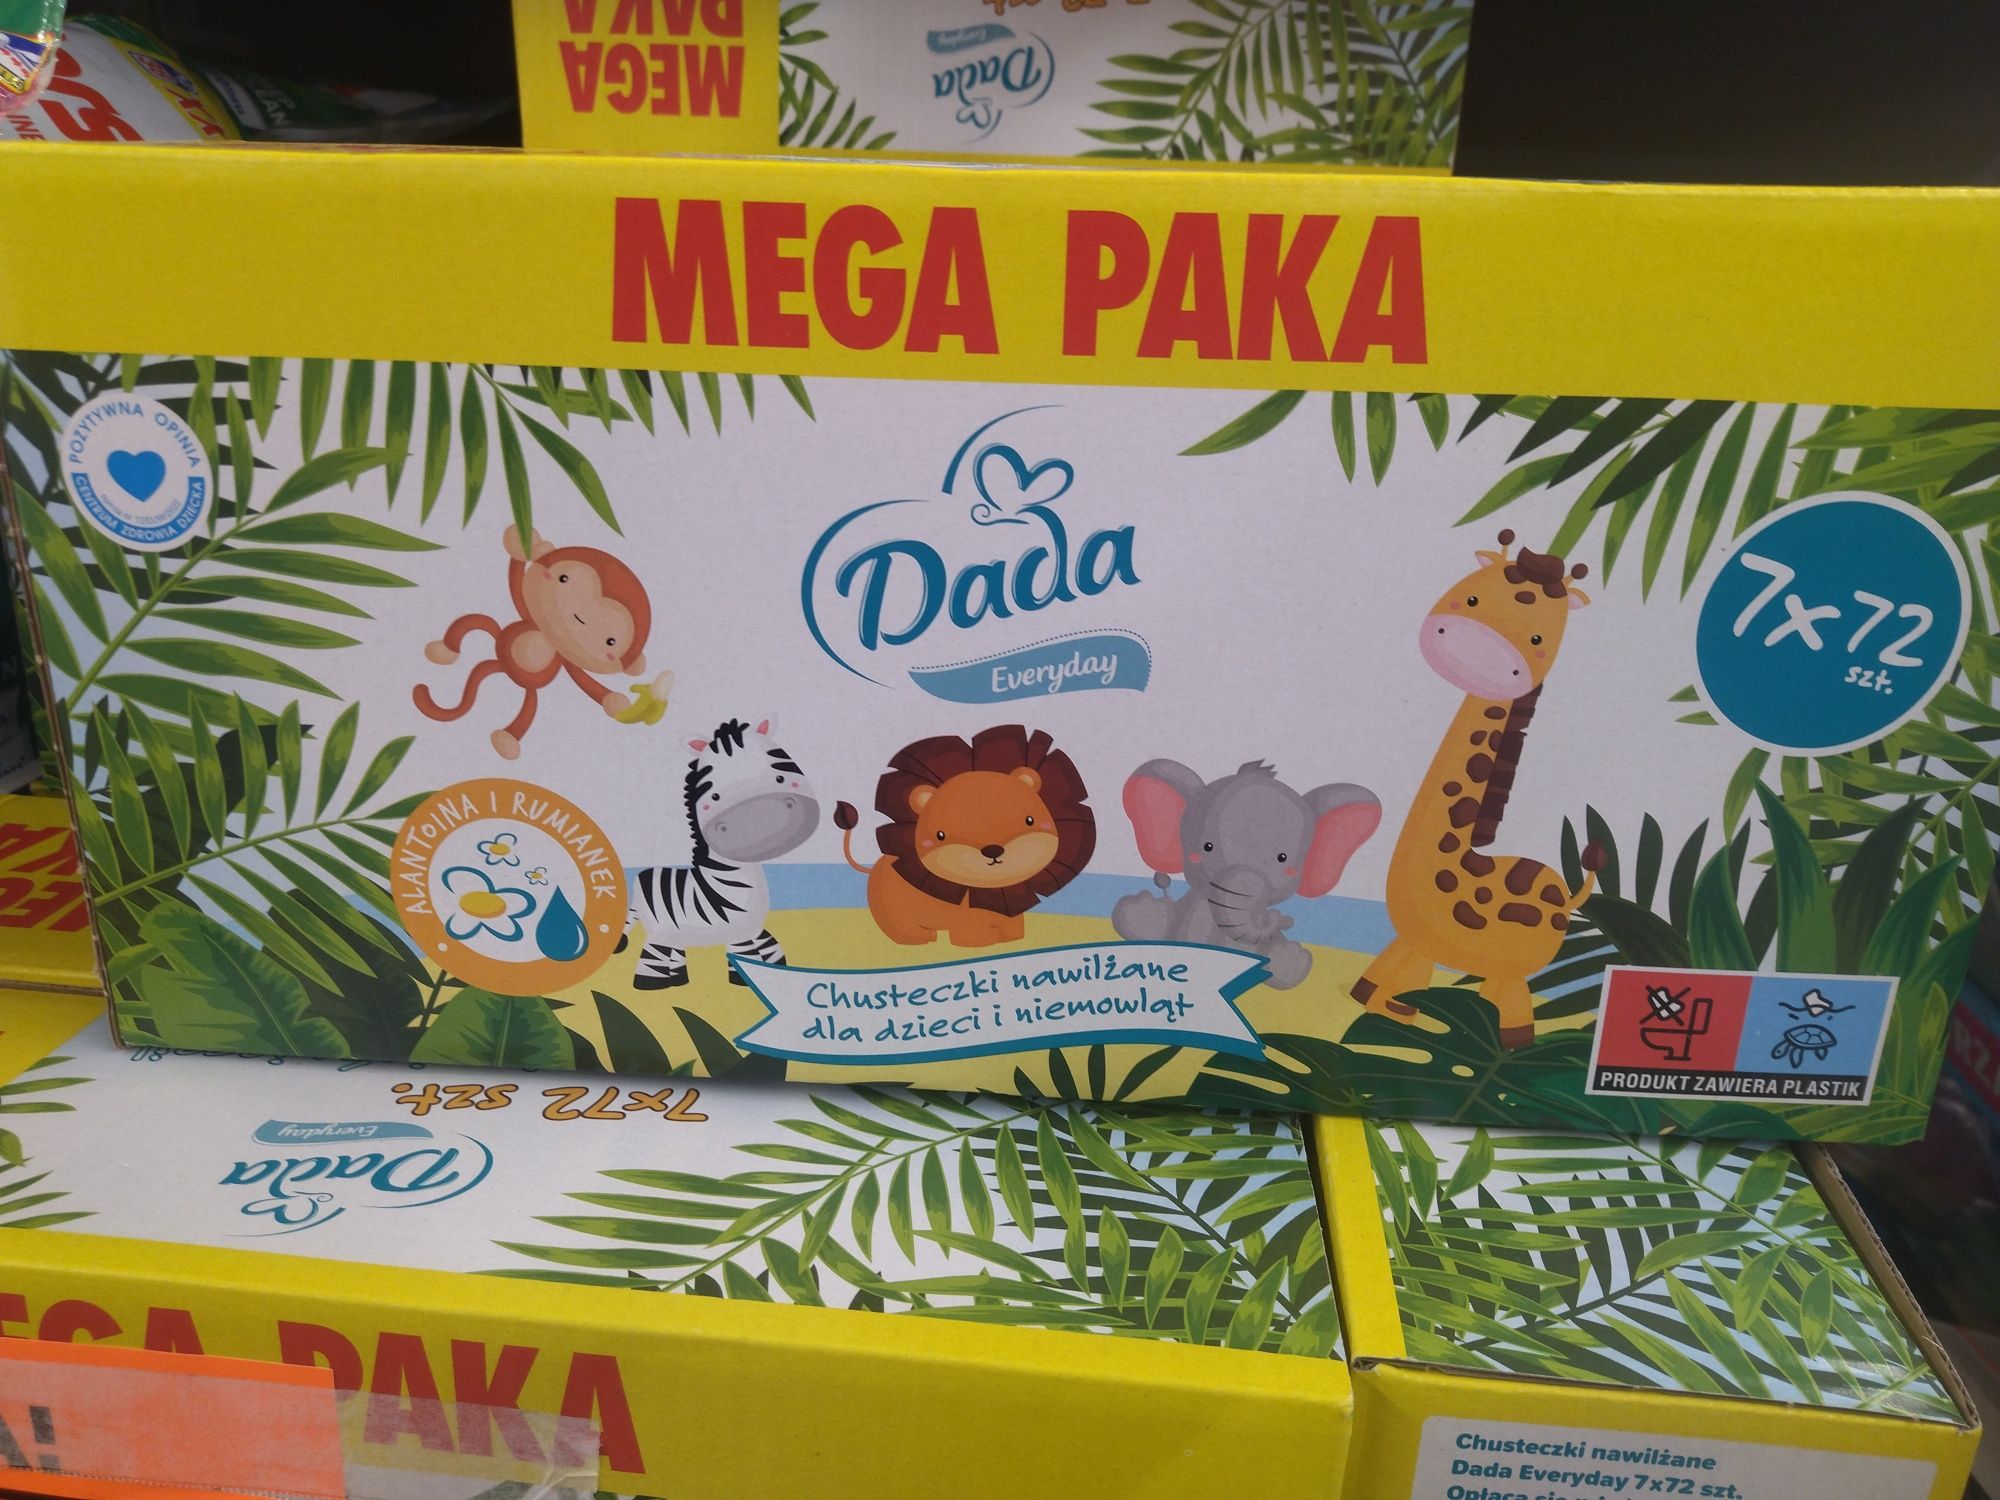 Салфетки фірми Dada Mega Paka!!!